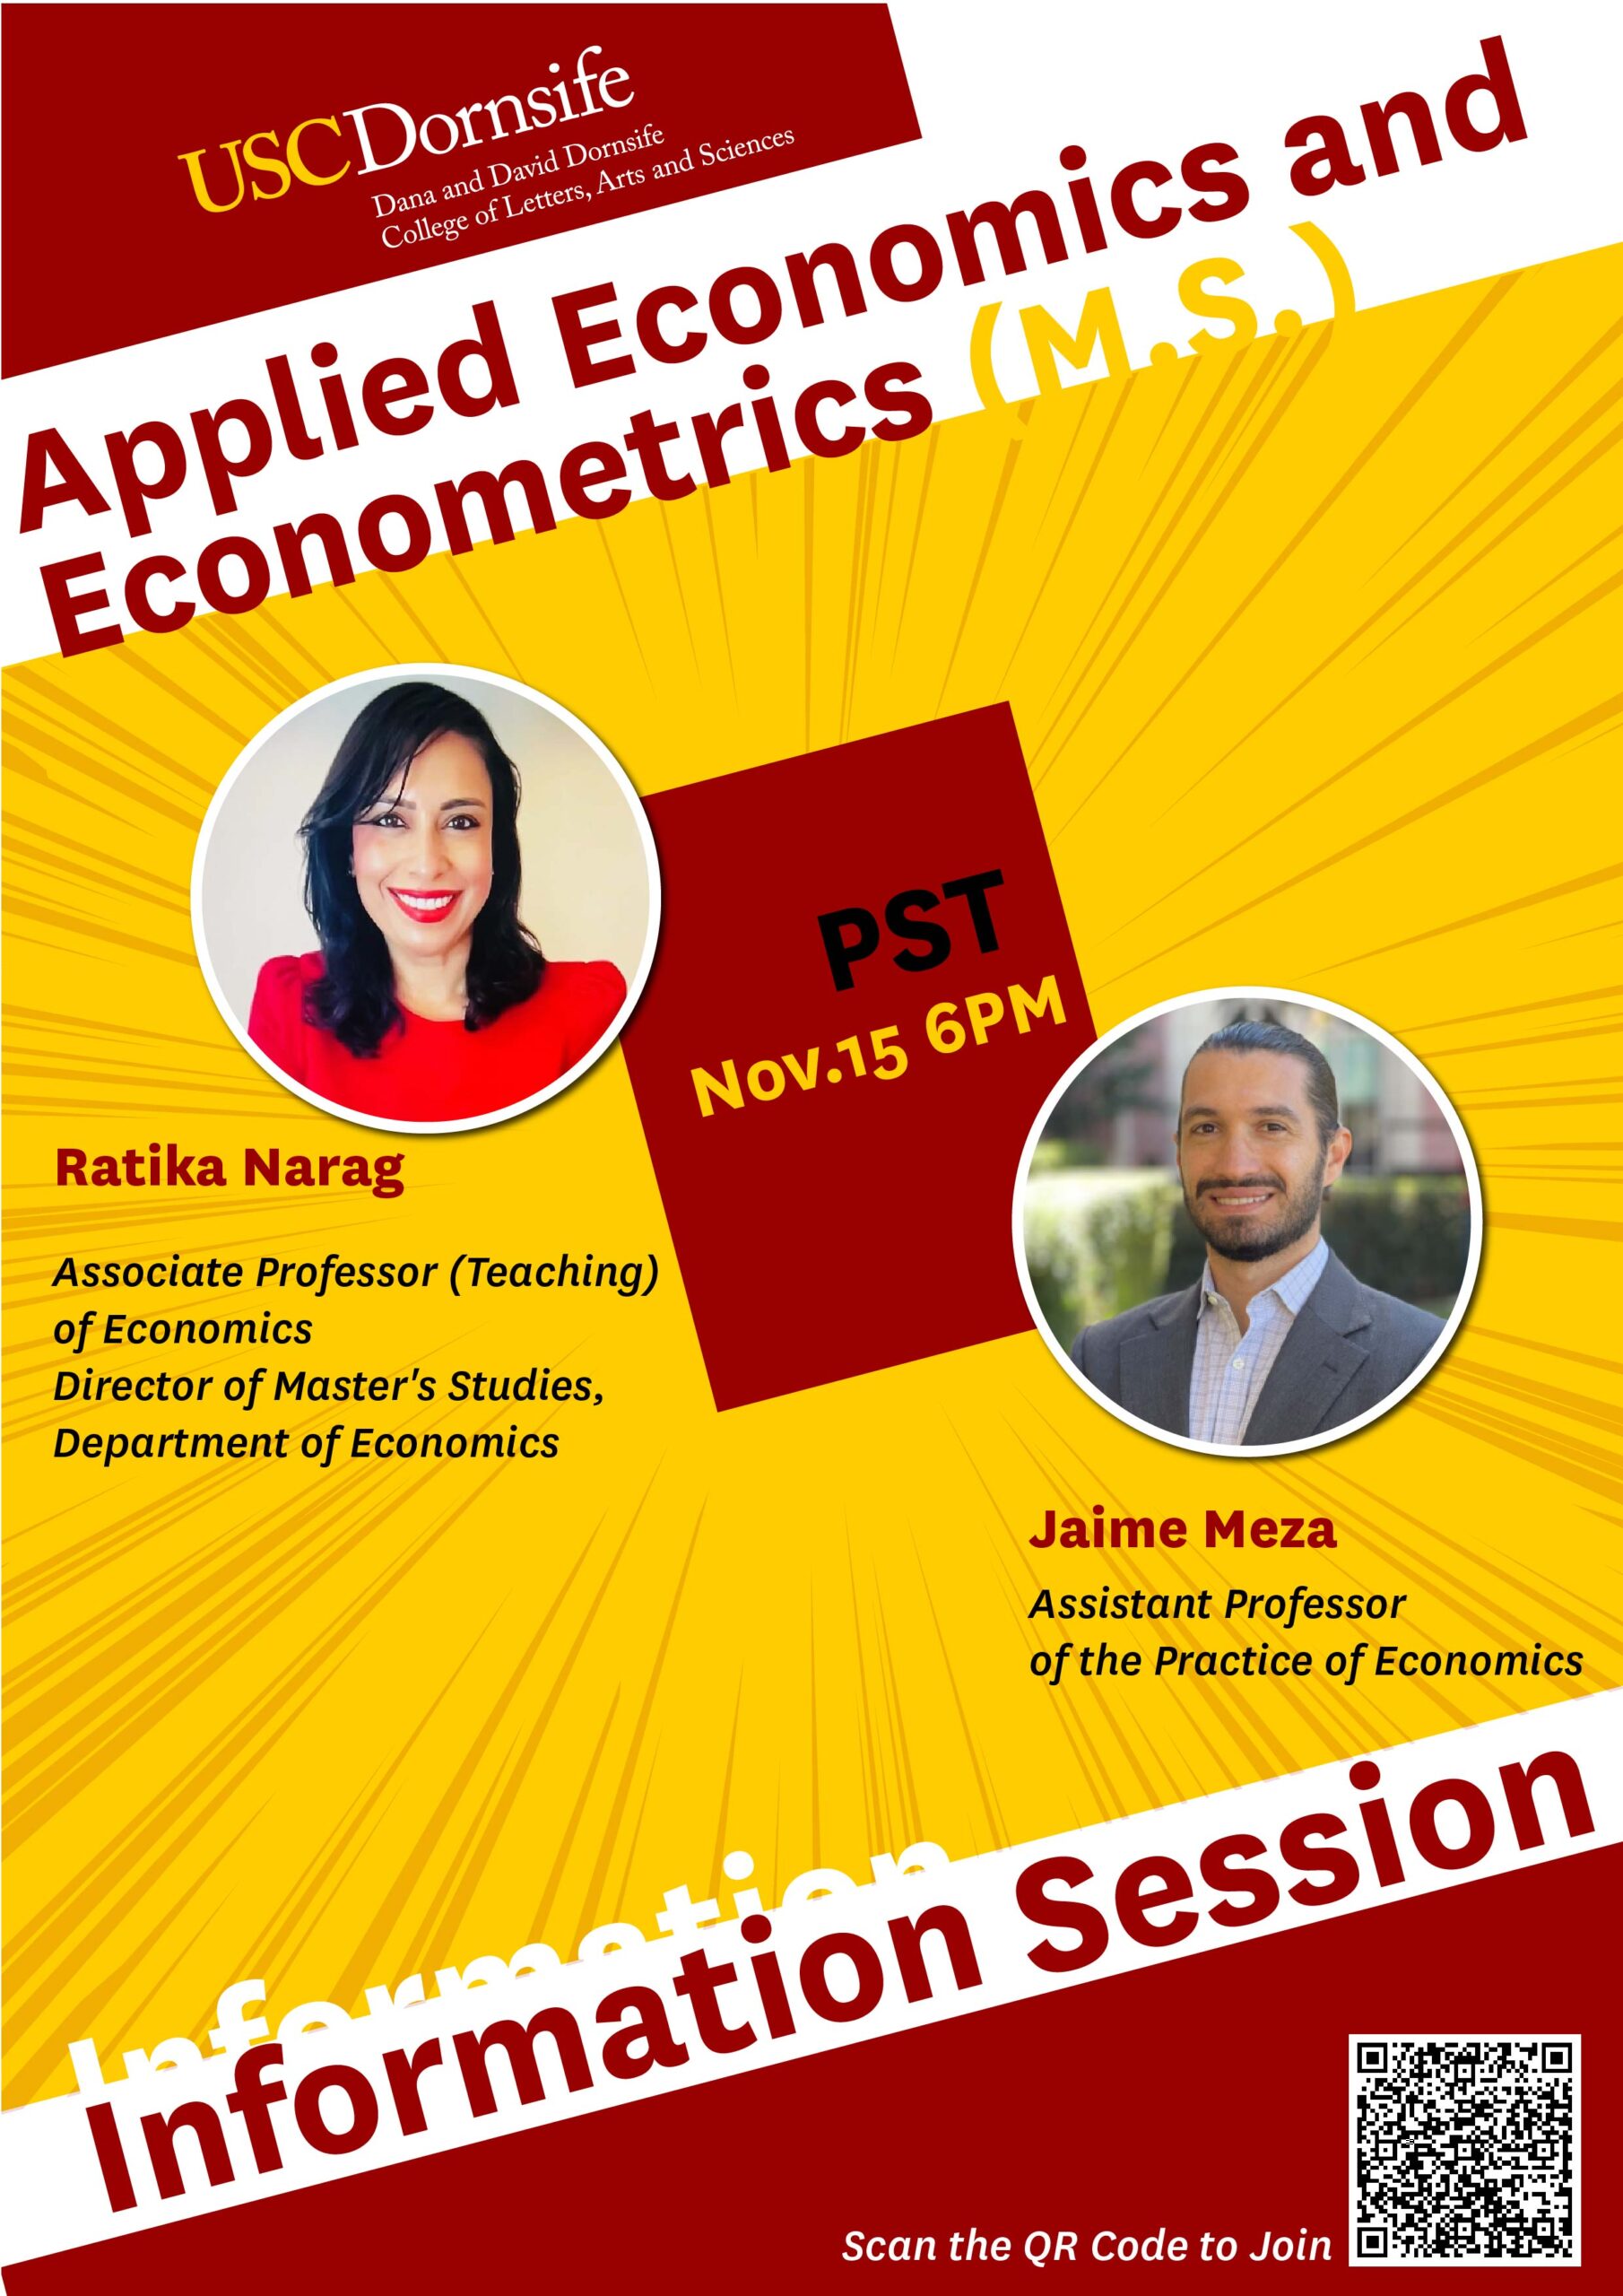 Applied Economics and Econometrics (M.S.) Information Session